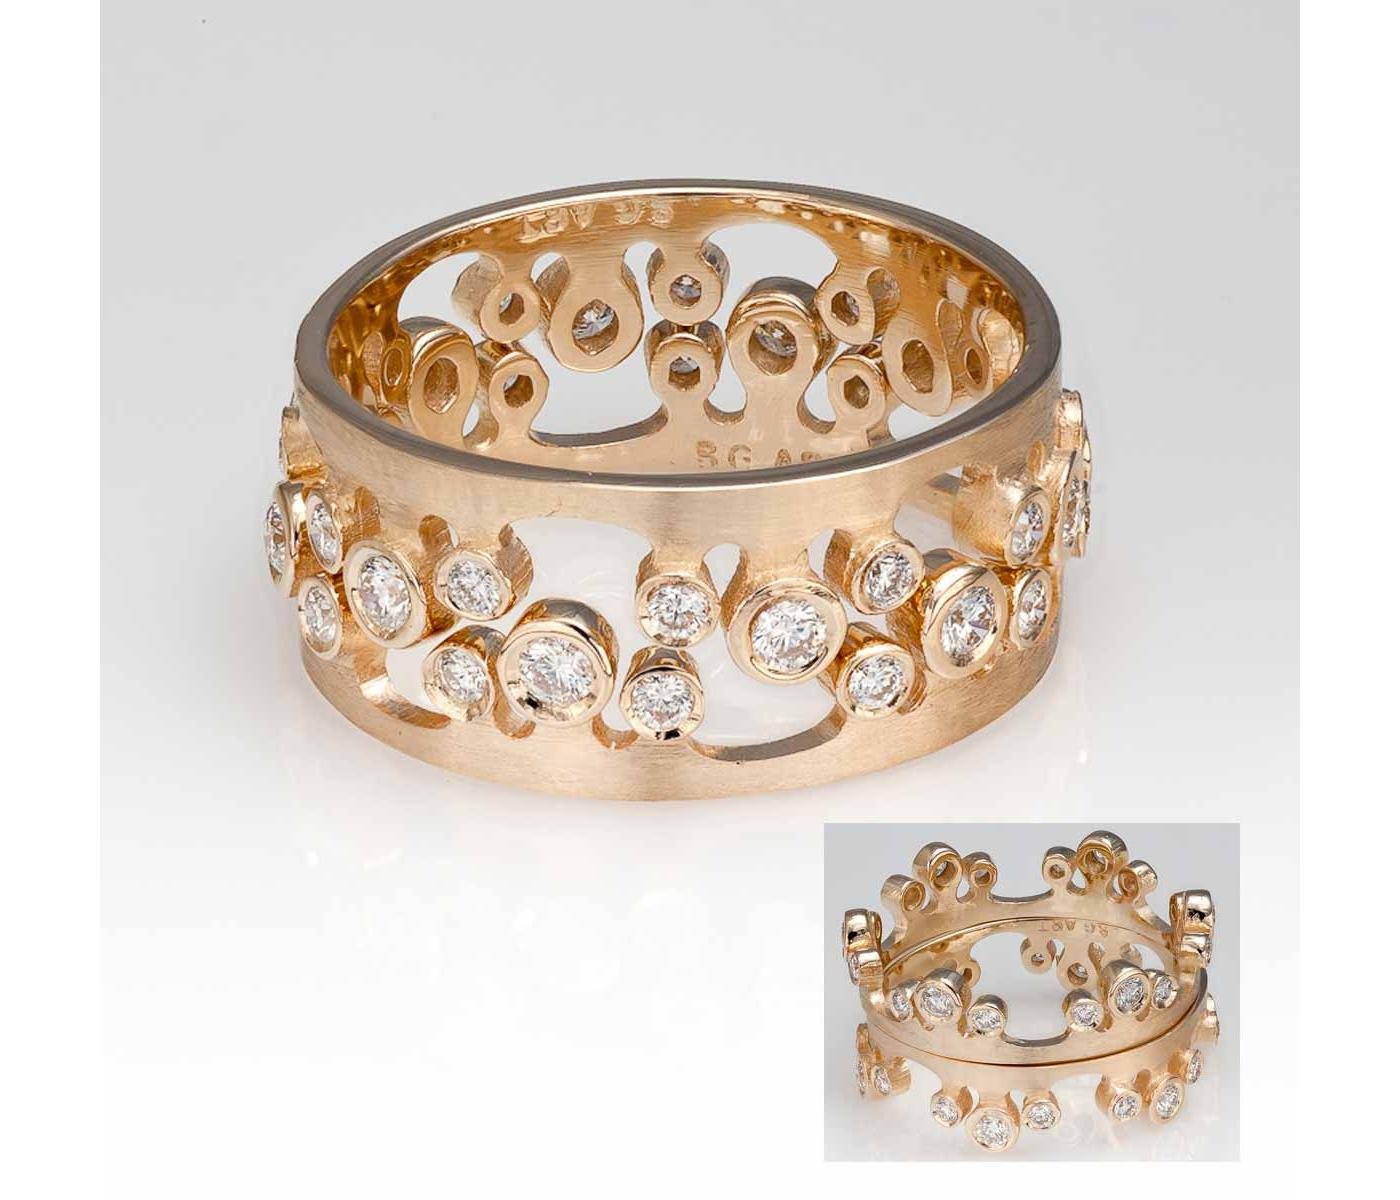 Ring by BG Art Jewelry Atelier